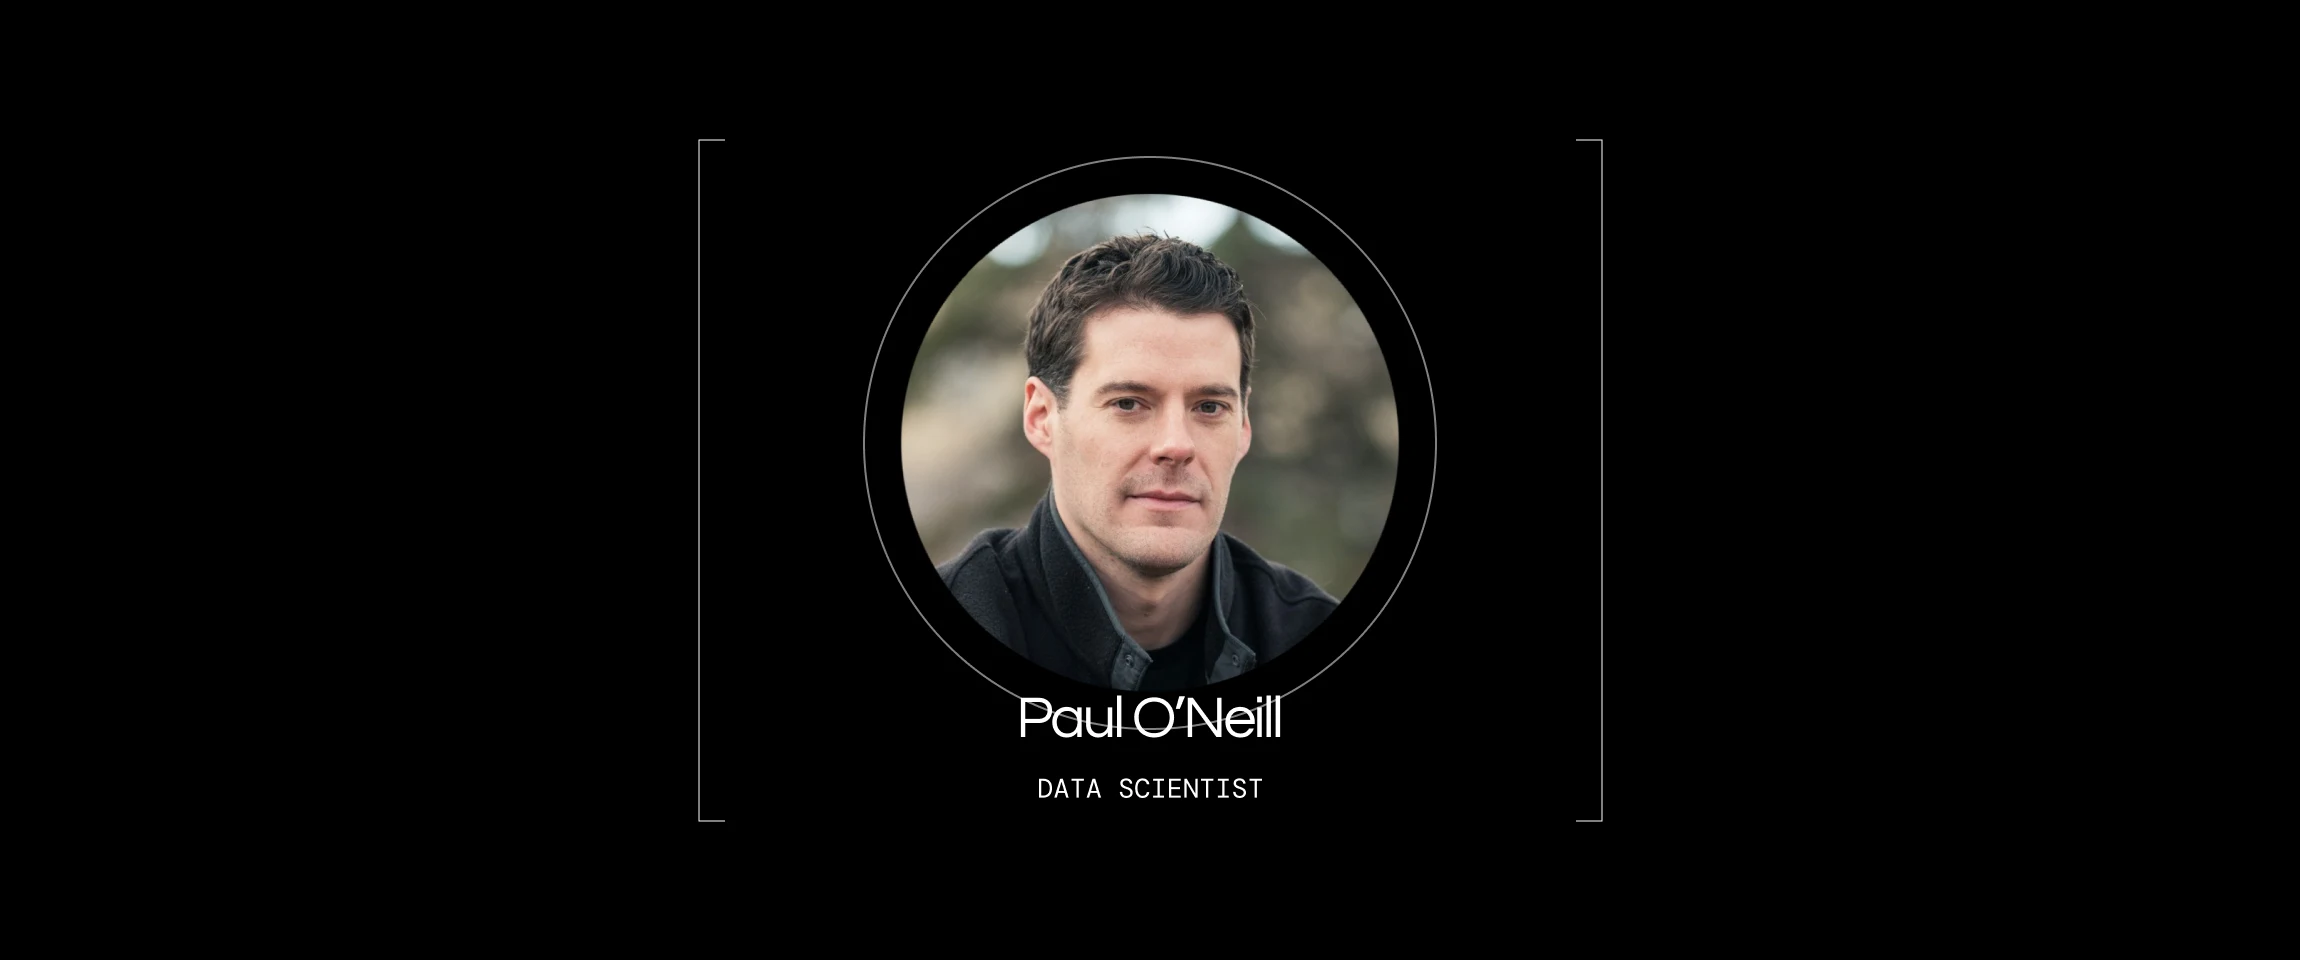 Paul O'Neill